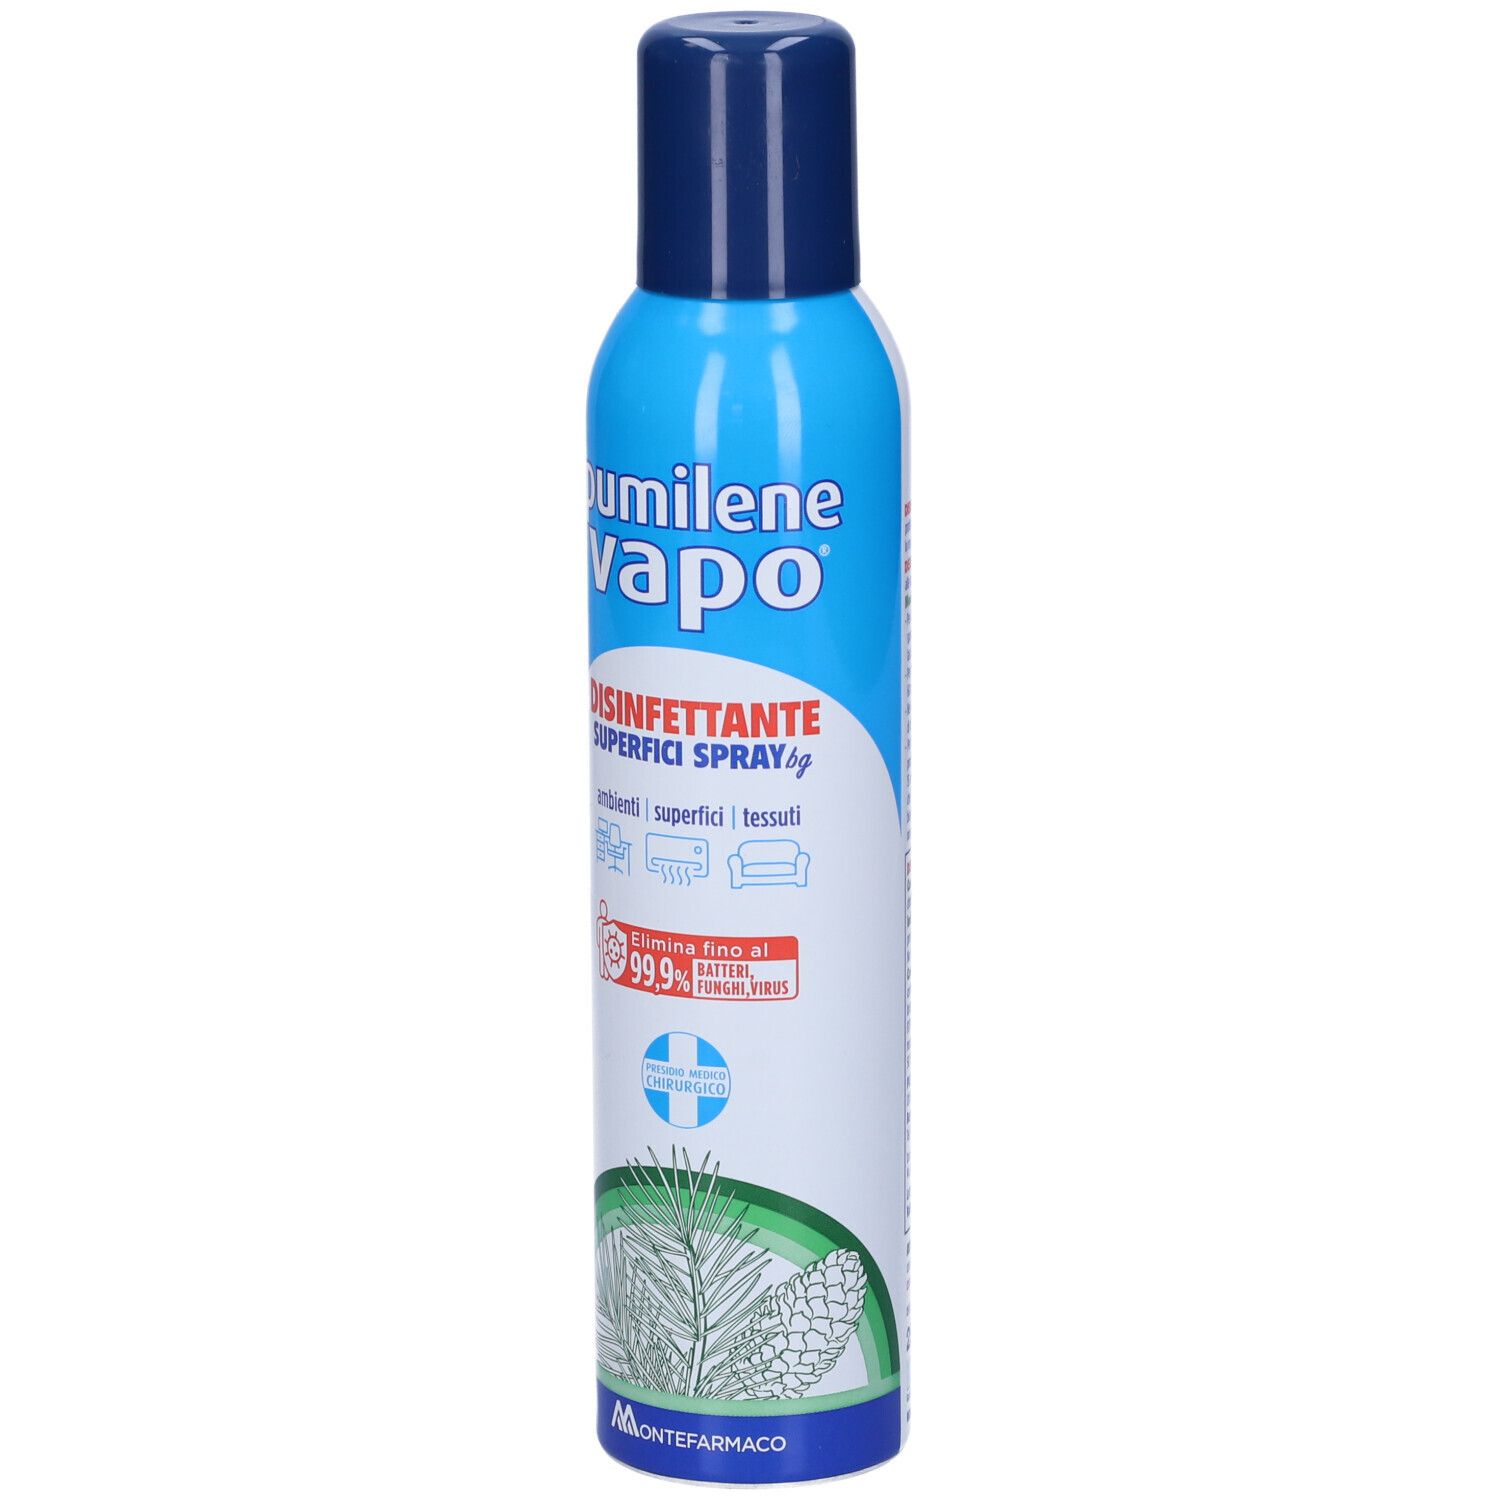 Pumilene Vapo® Disinfettante Spray 250 ml